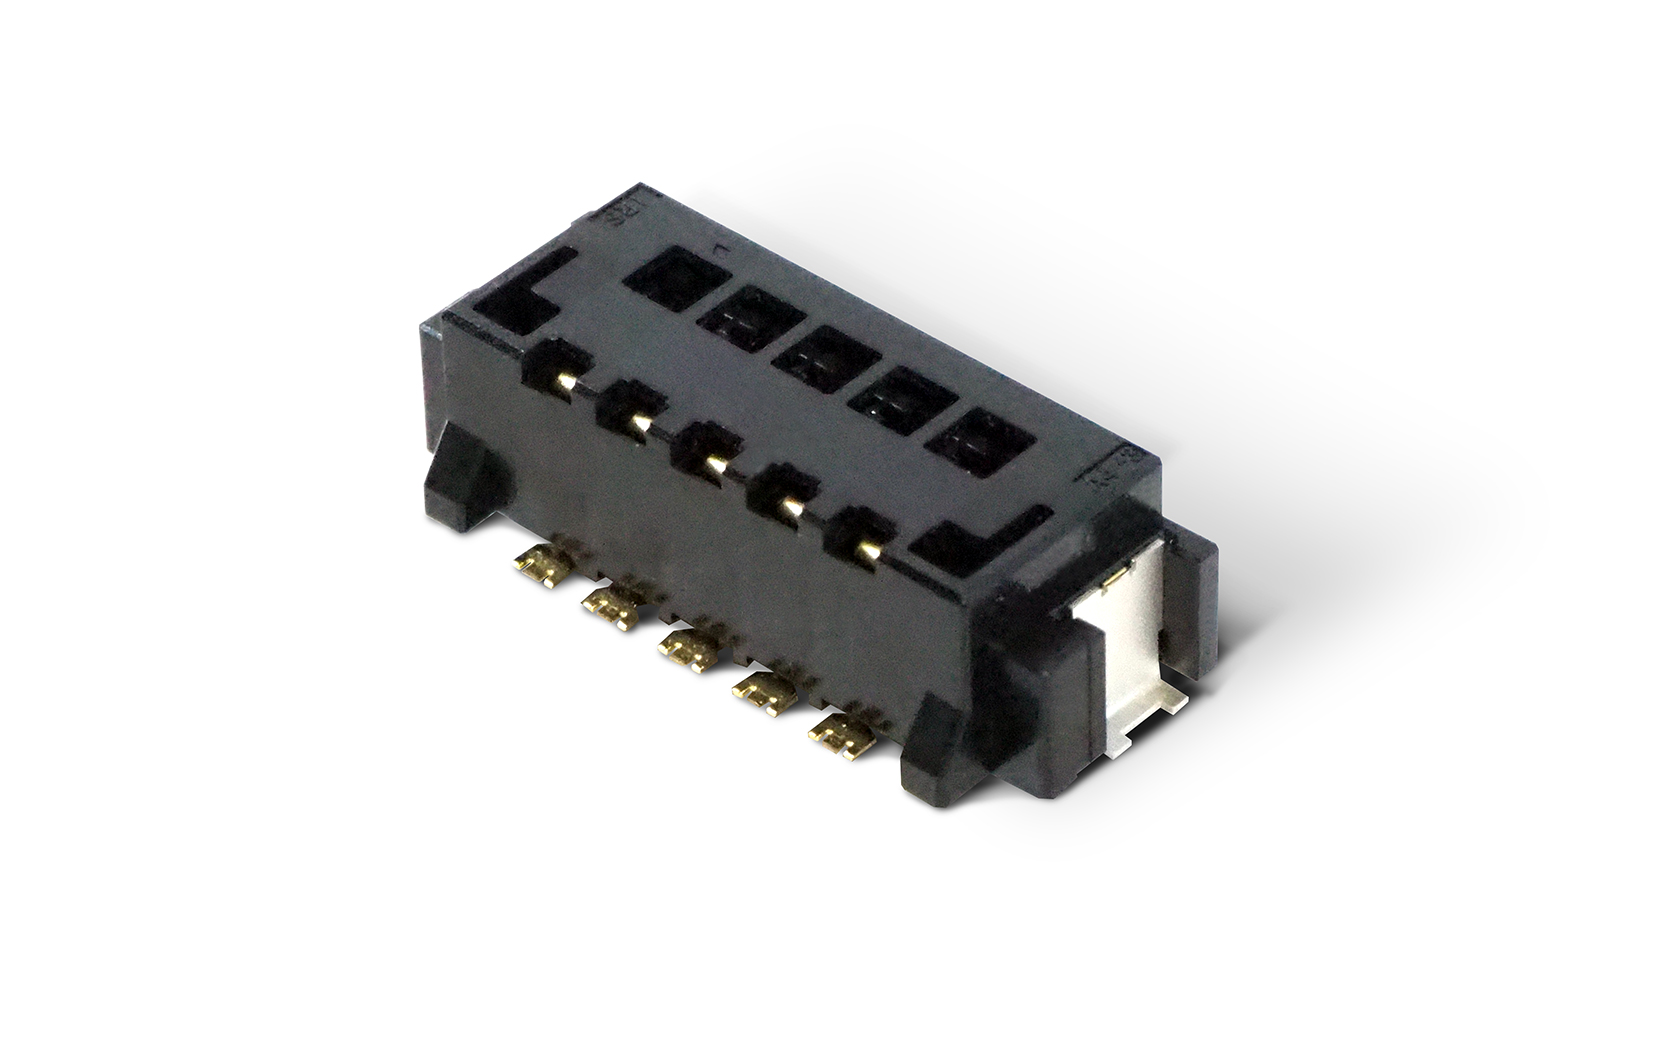 Iriso Electronics - Produkt Pin Header / Socket Connector 18021s Series